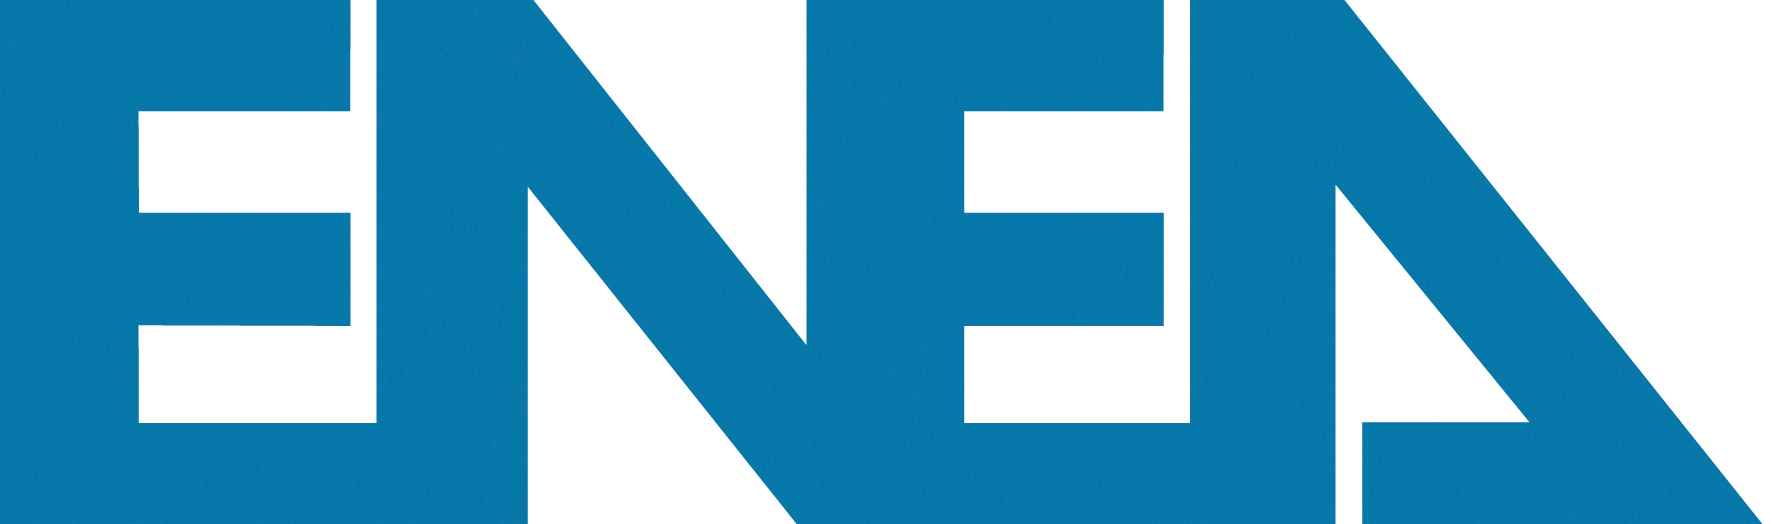 logo_enea